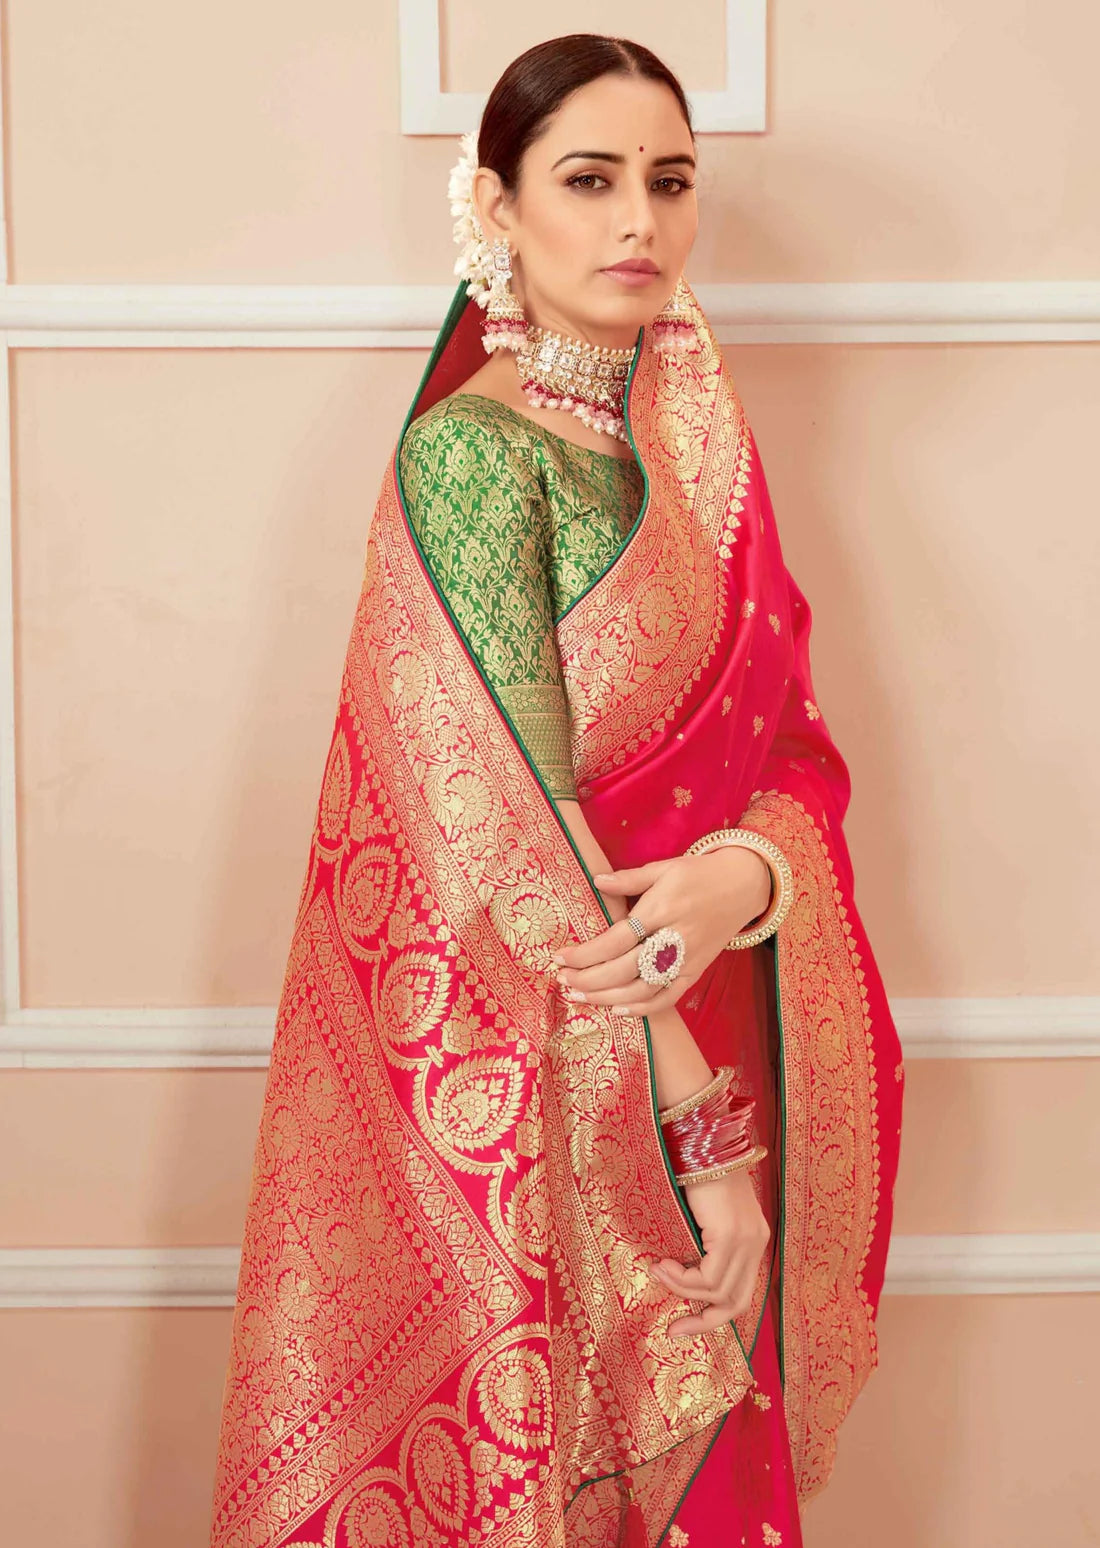 bride in Handloom Silk Red Banarasi Bridal Saree with Contrast Green Blouse wearing jewelery